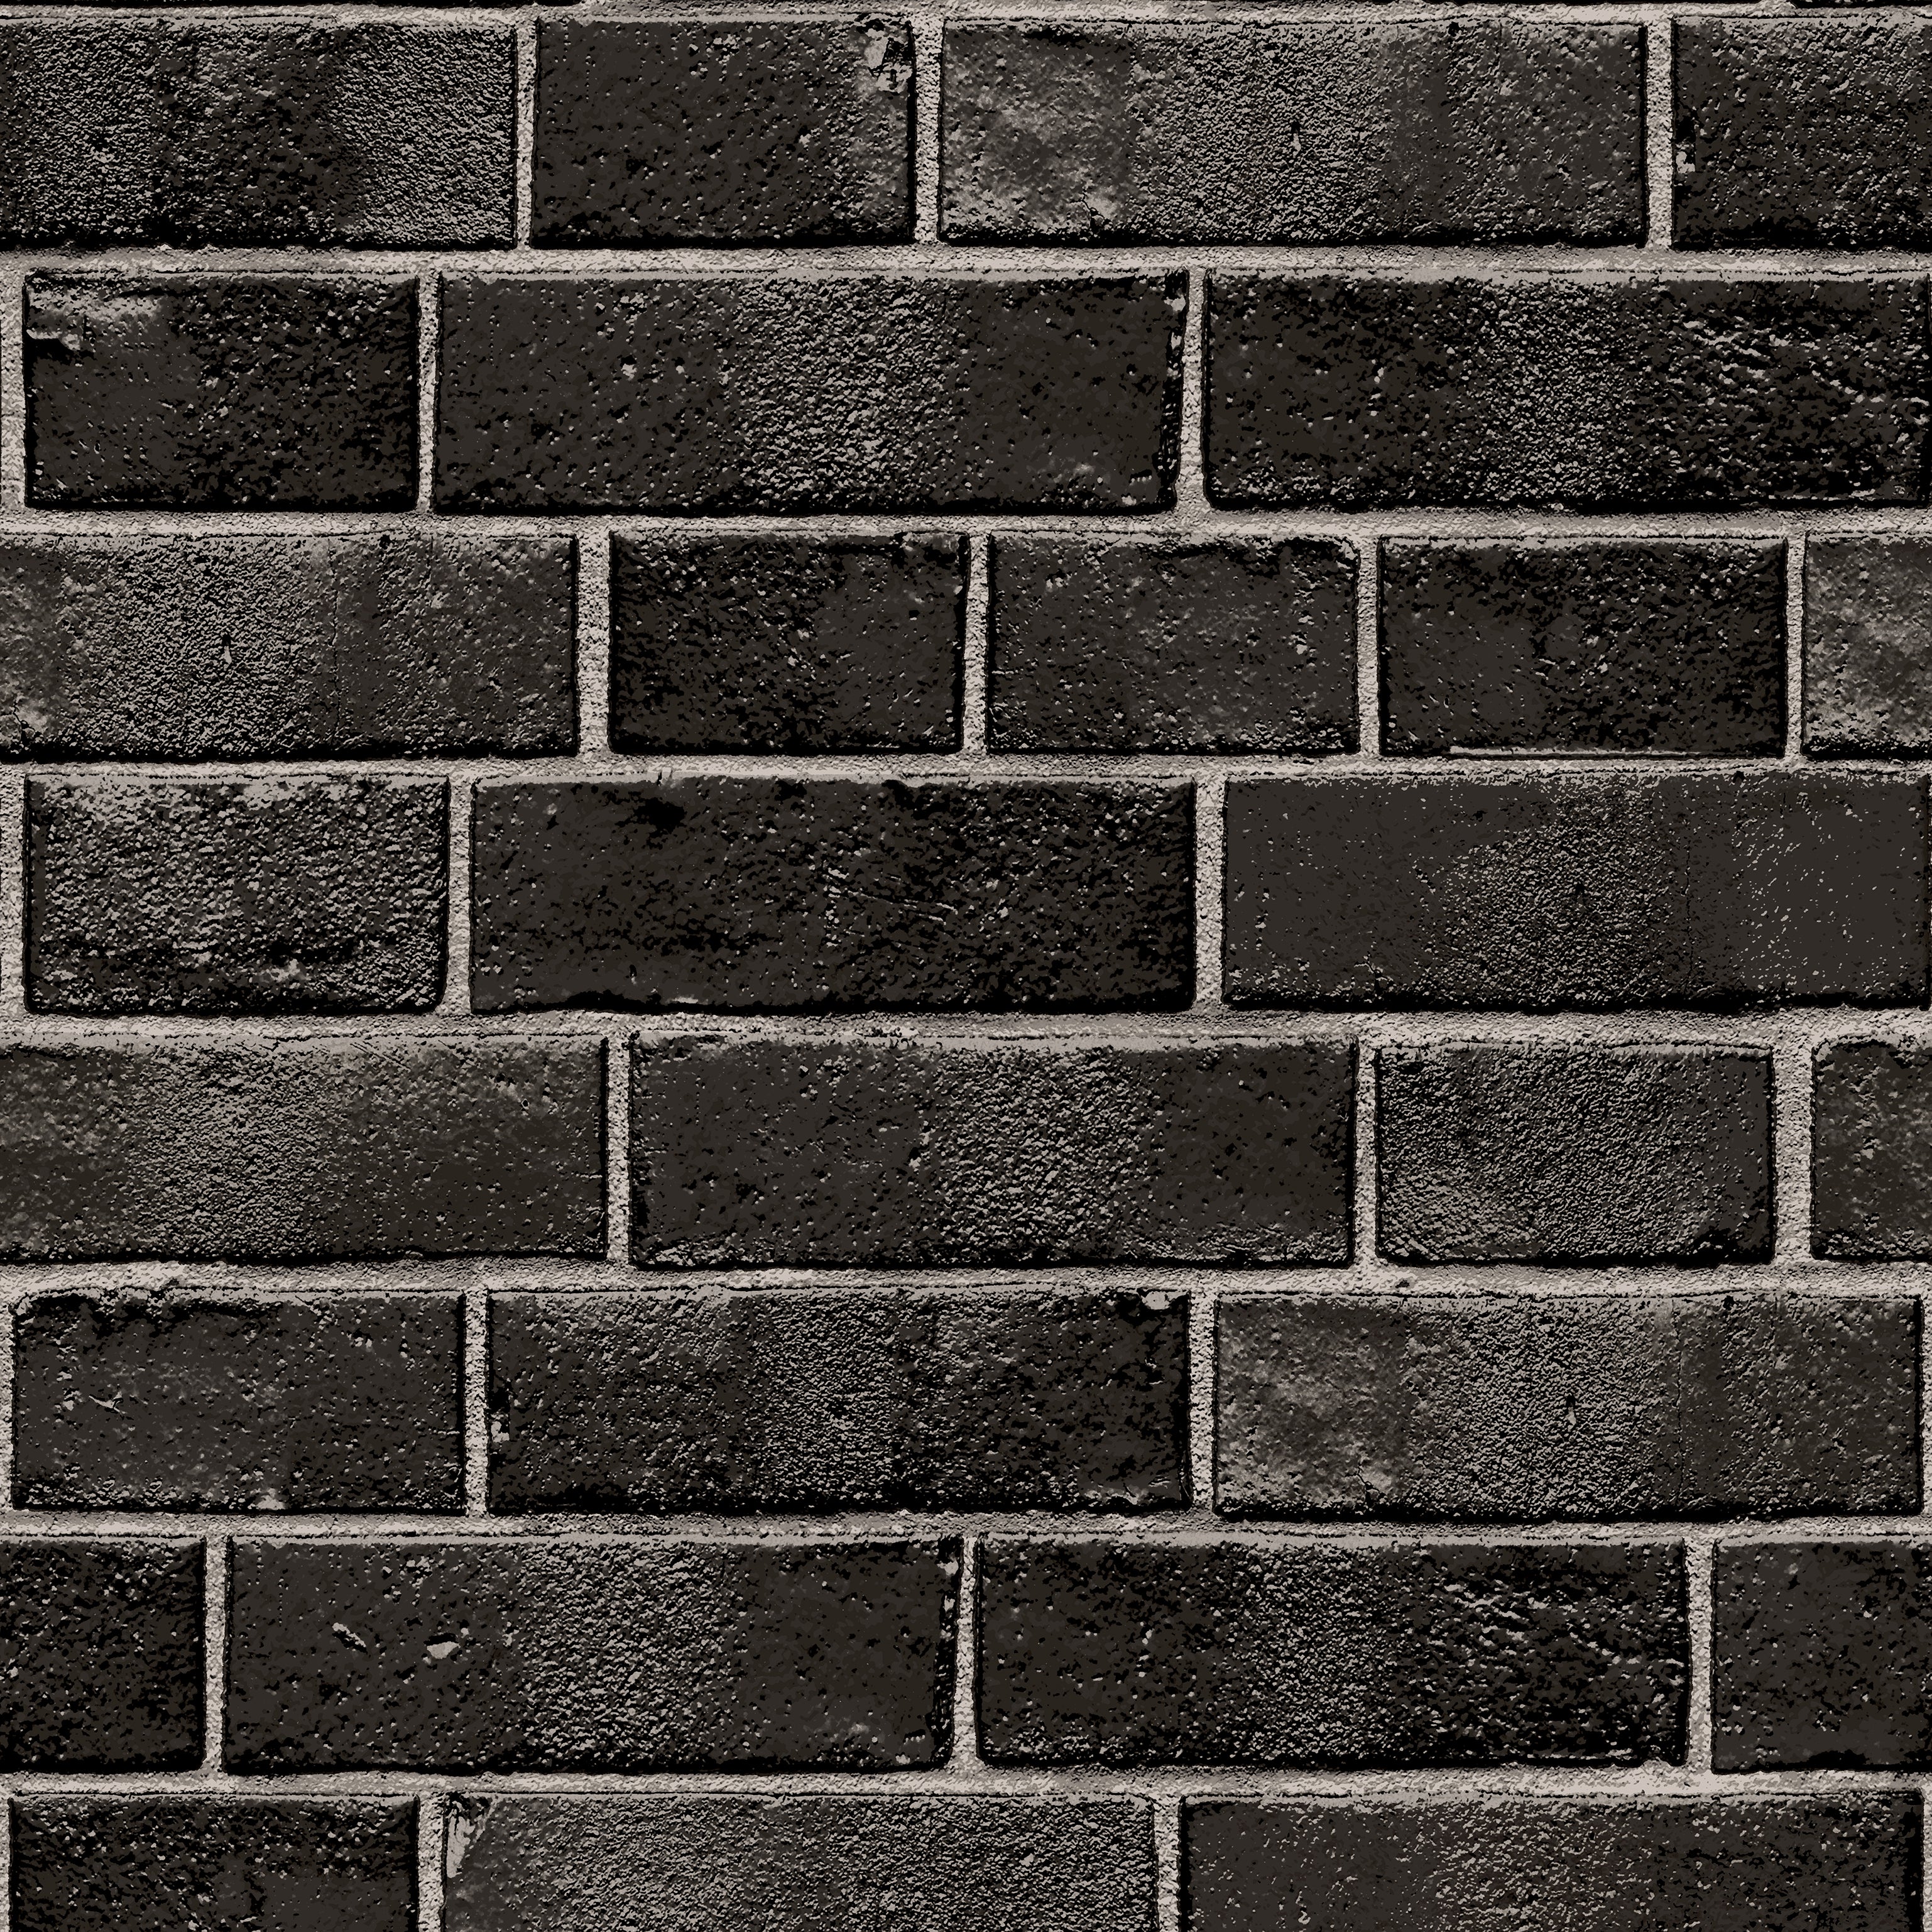 Tempaper Ebony Brick. Designer Removable Peel and Stick Wallpaper